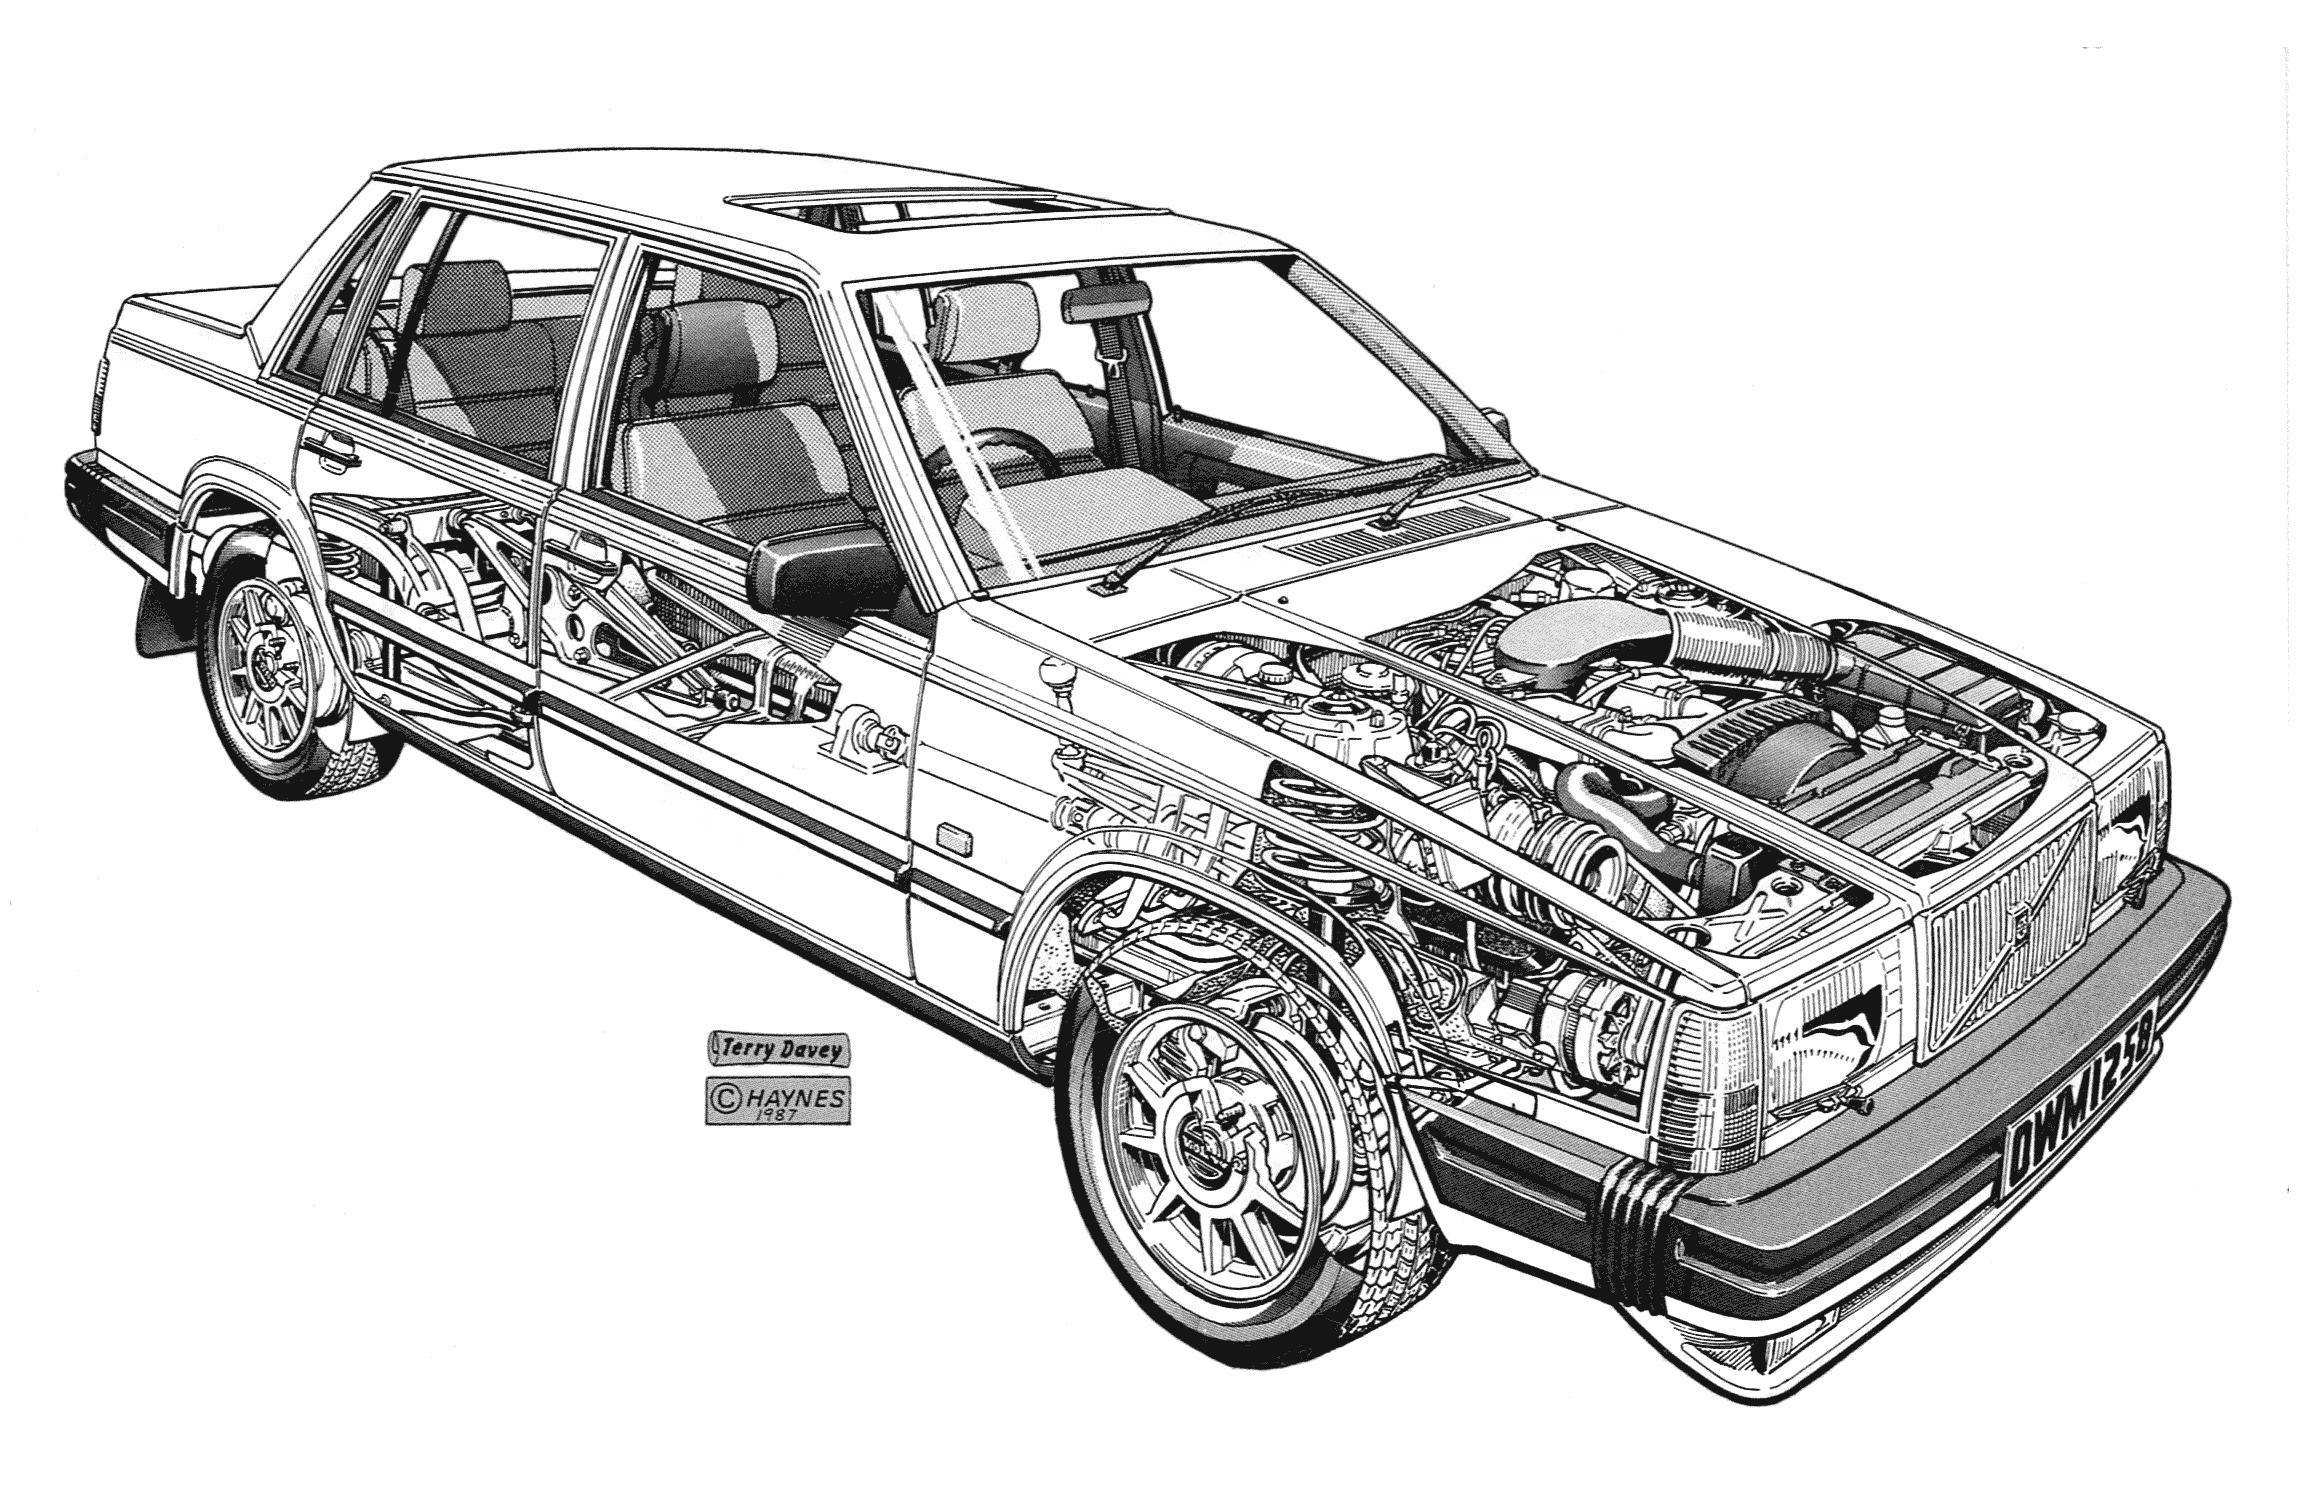 Volvo 740 cutaway drawing